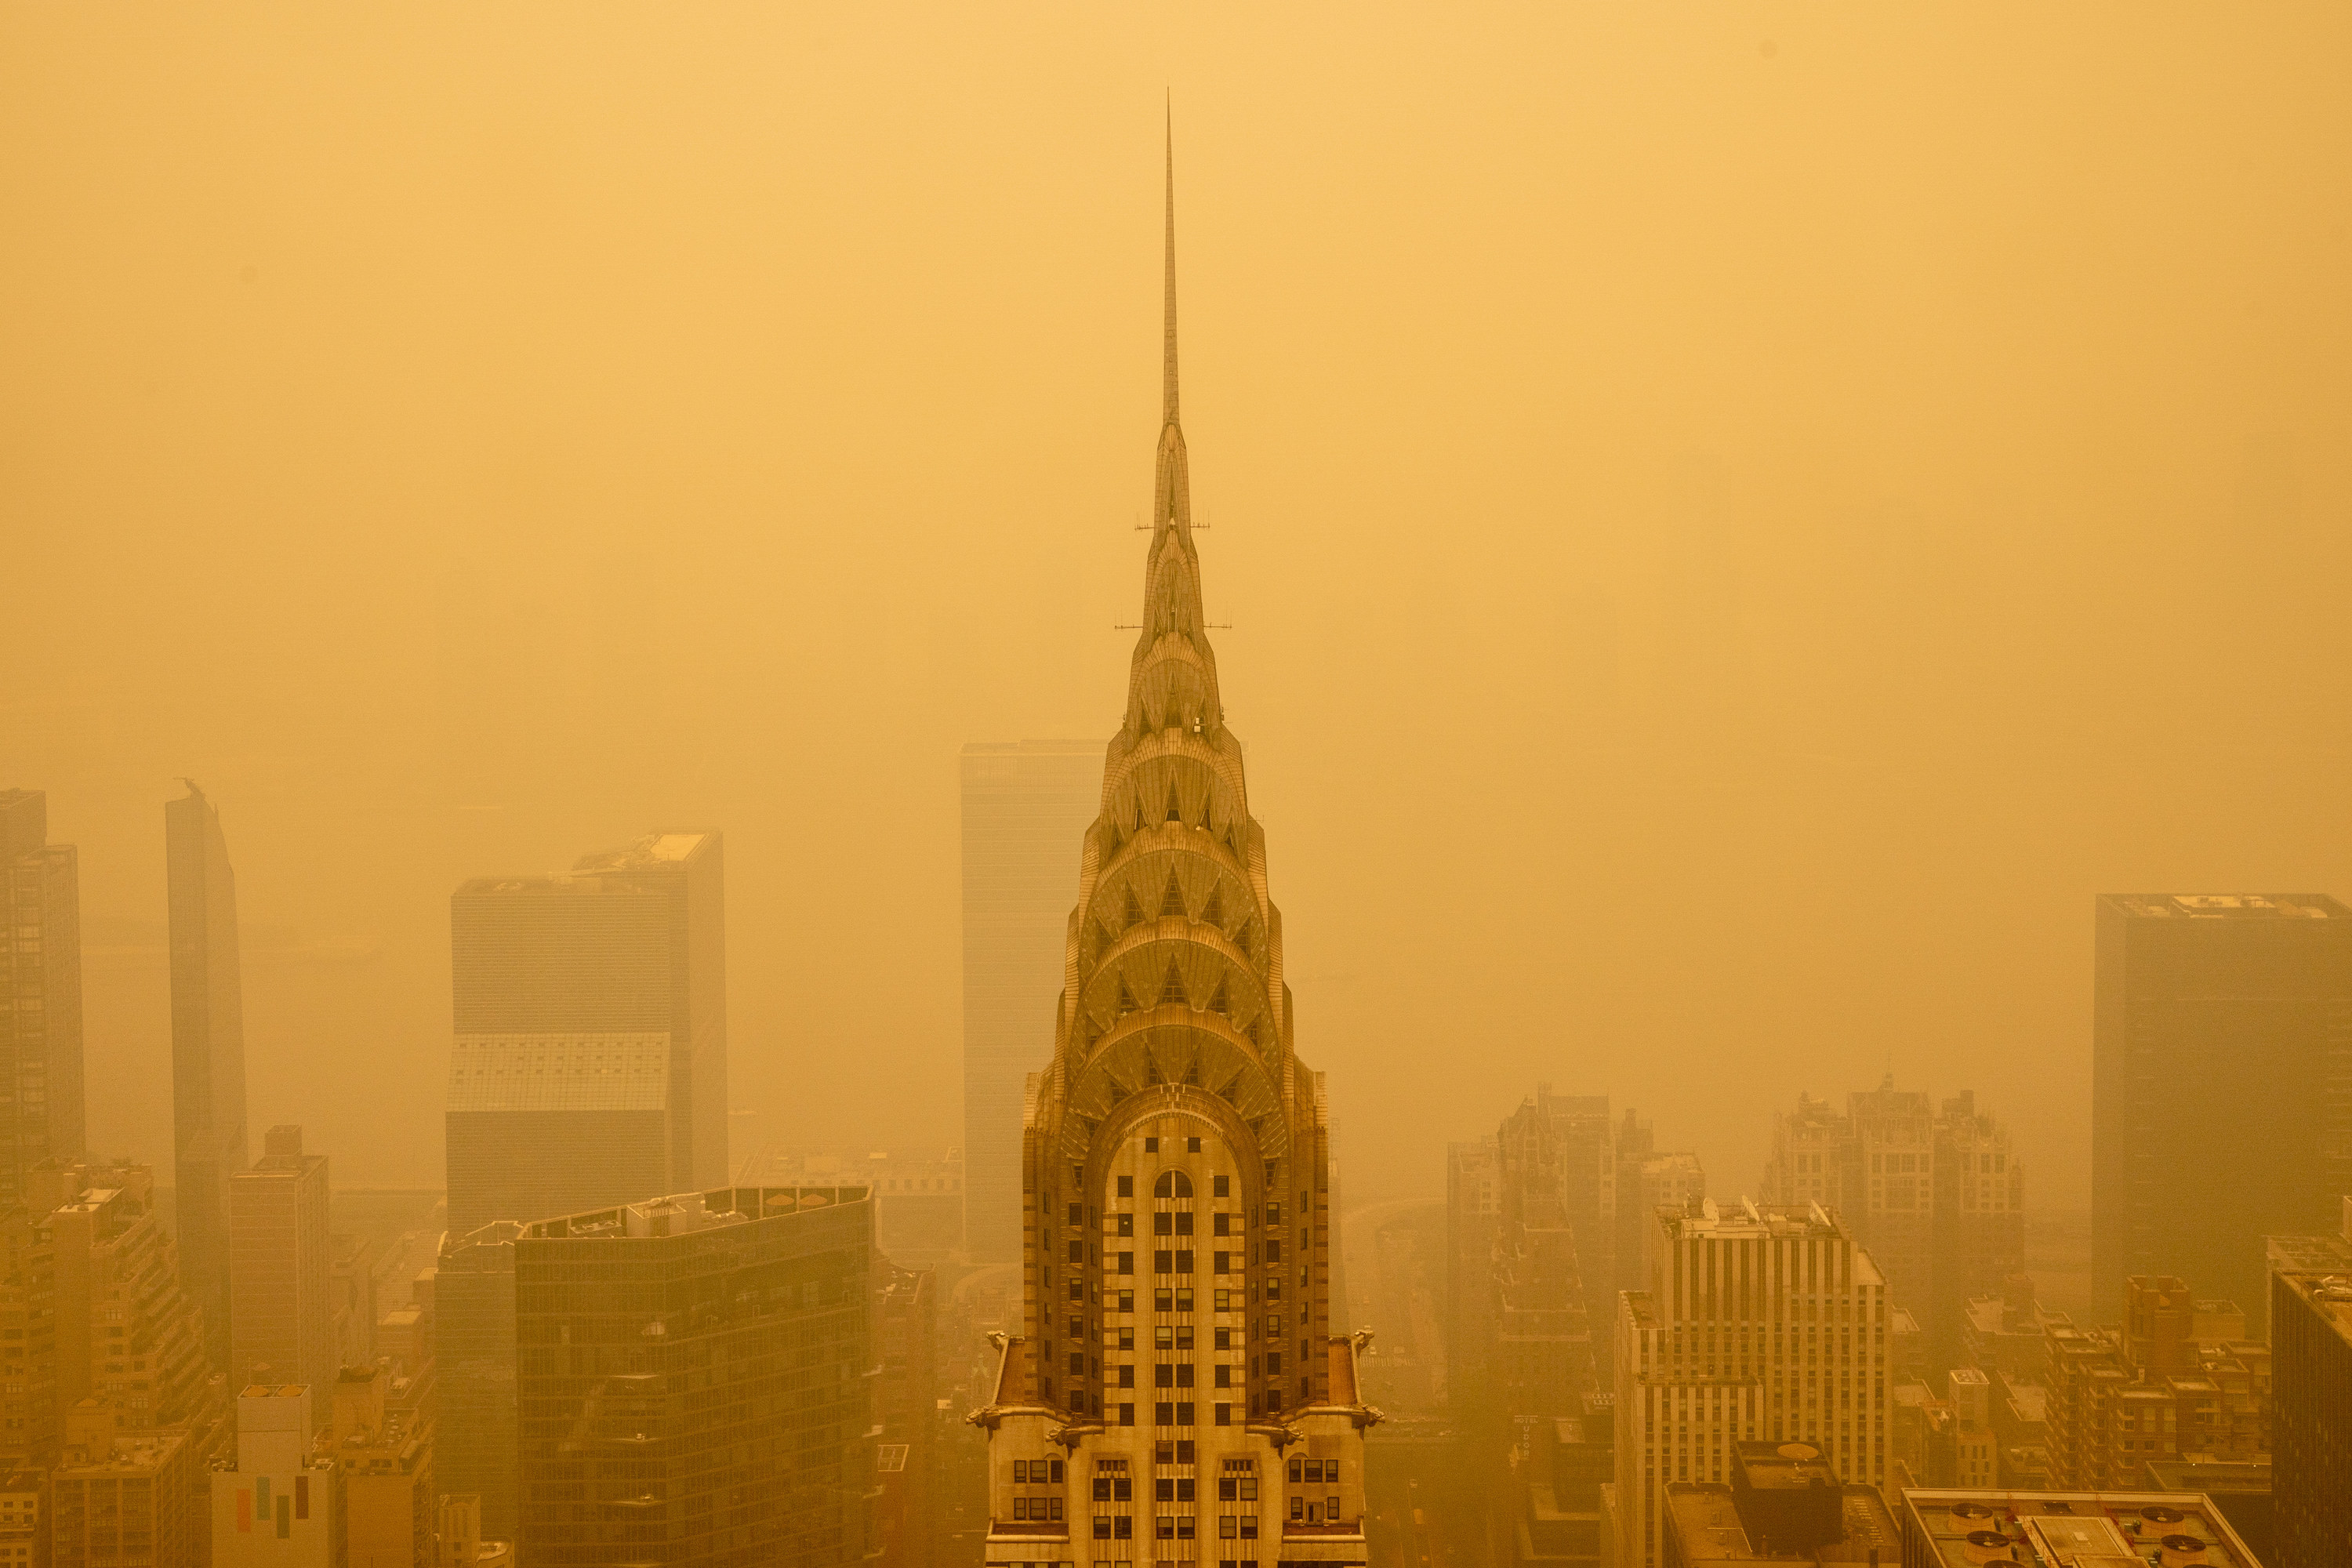 The Chrysler Building in New York City engulfed by orangey haze